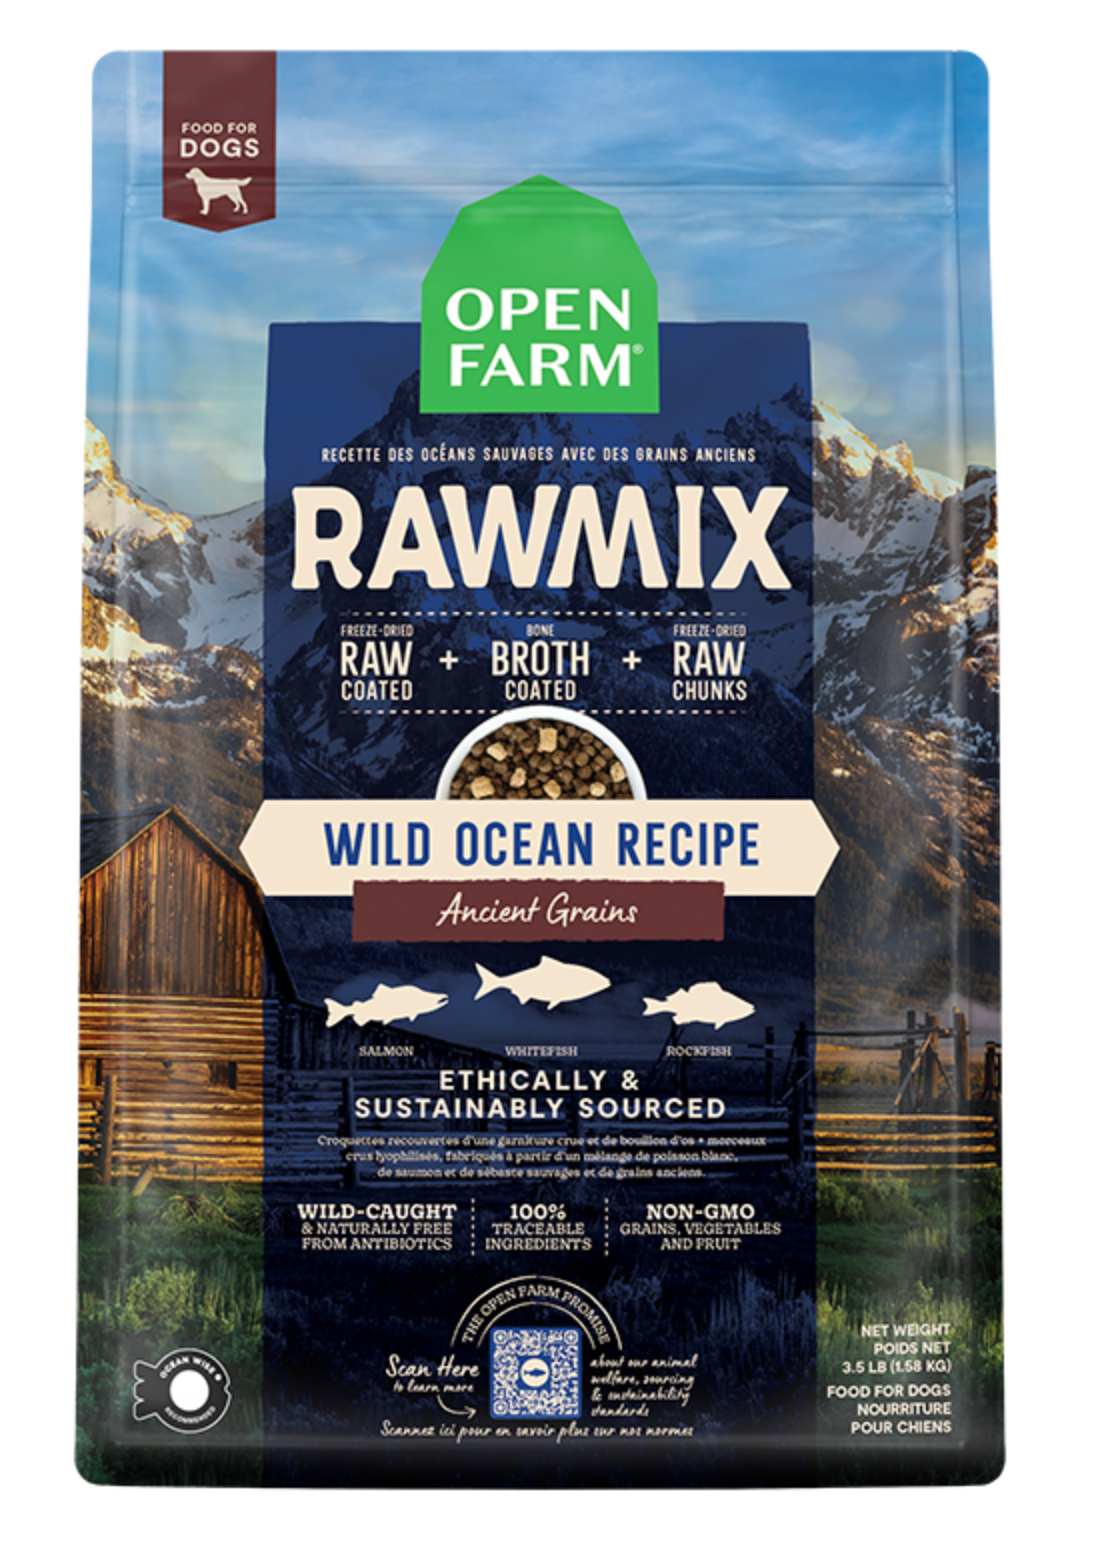 Open Farm Grain-Free RawMix for Dogs, Wild Ocean Recipe